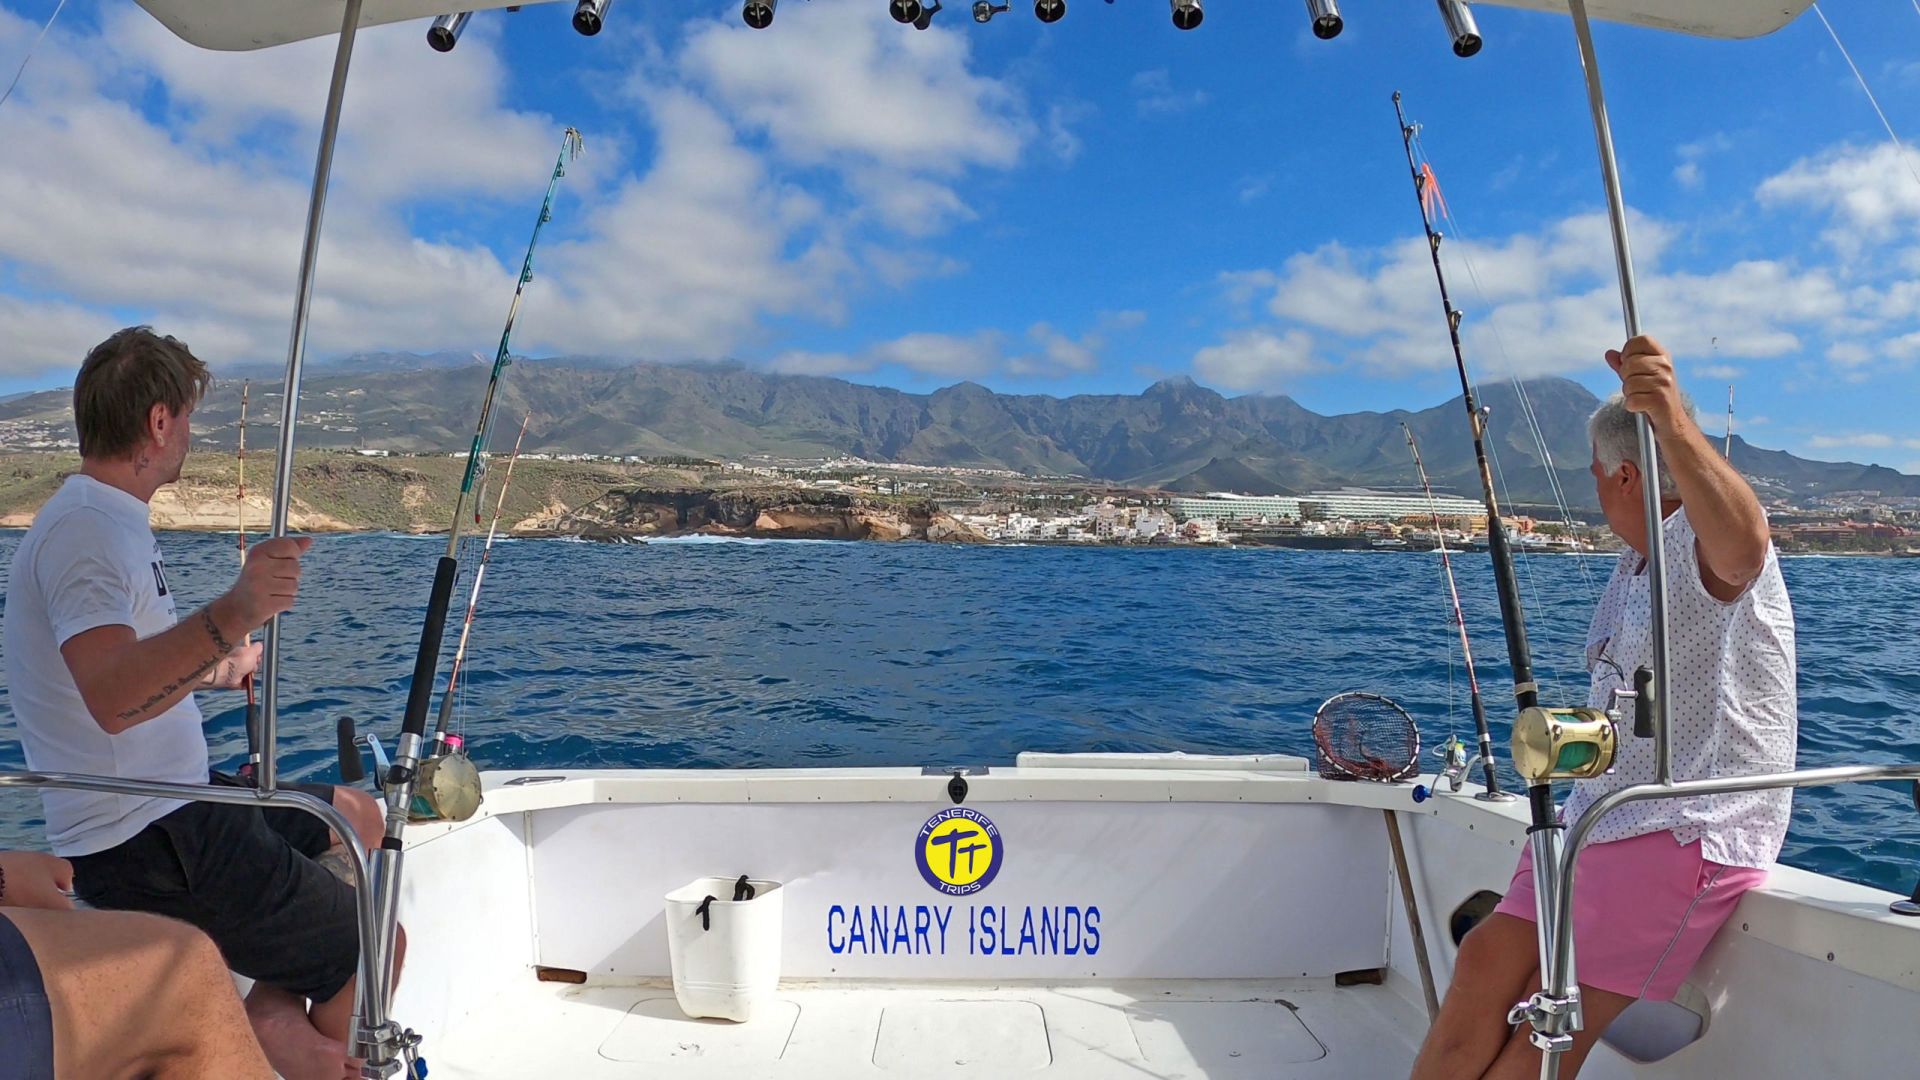 Tenerife fishing